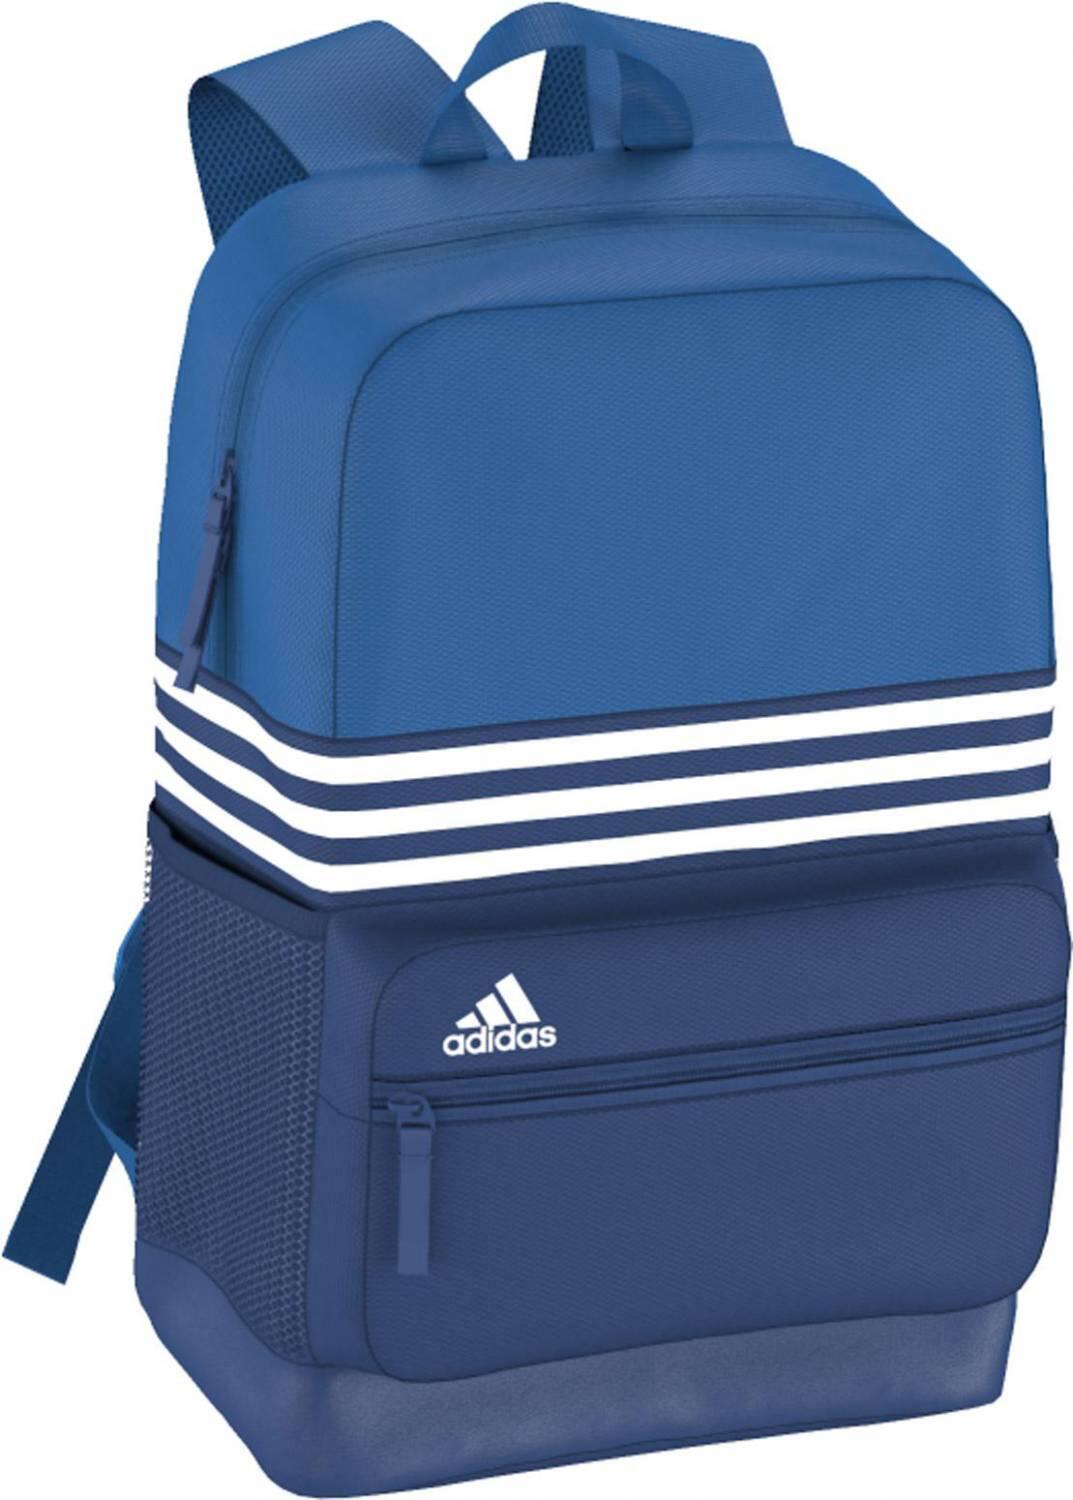 adidas Sports Backpack 3S Stadtrucksack (eqt blue s16/white/shock blue s16) von Adidas